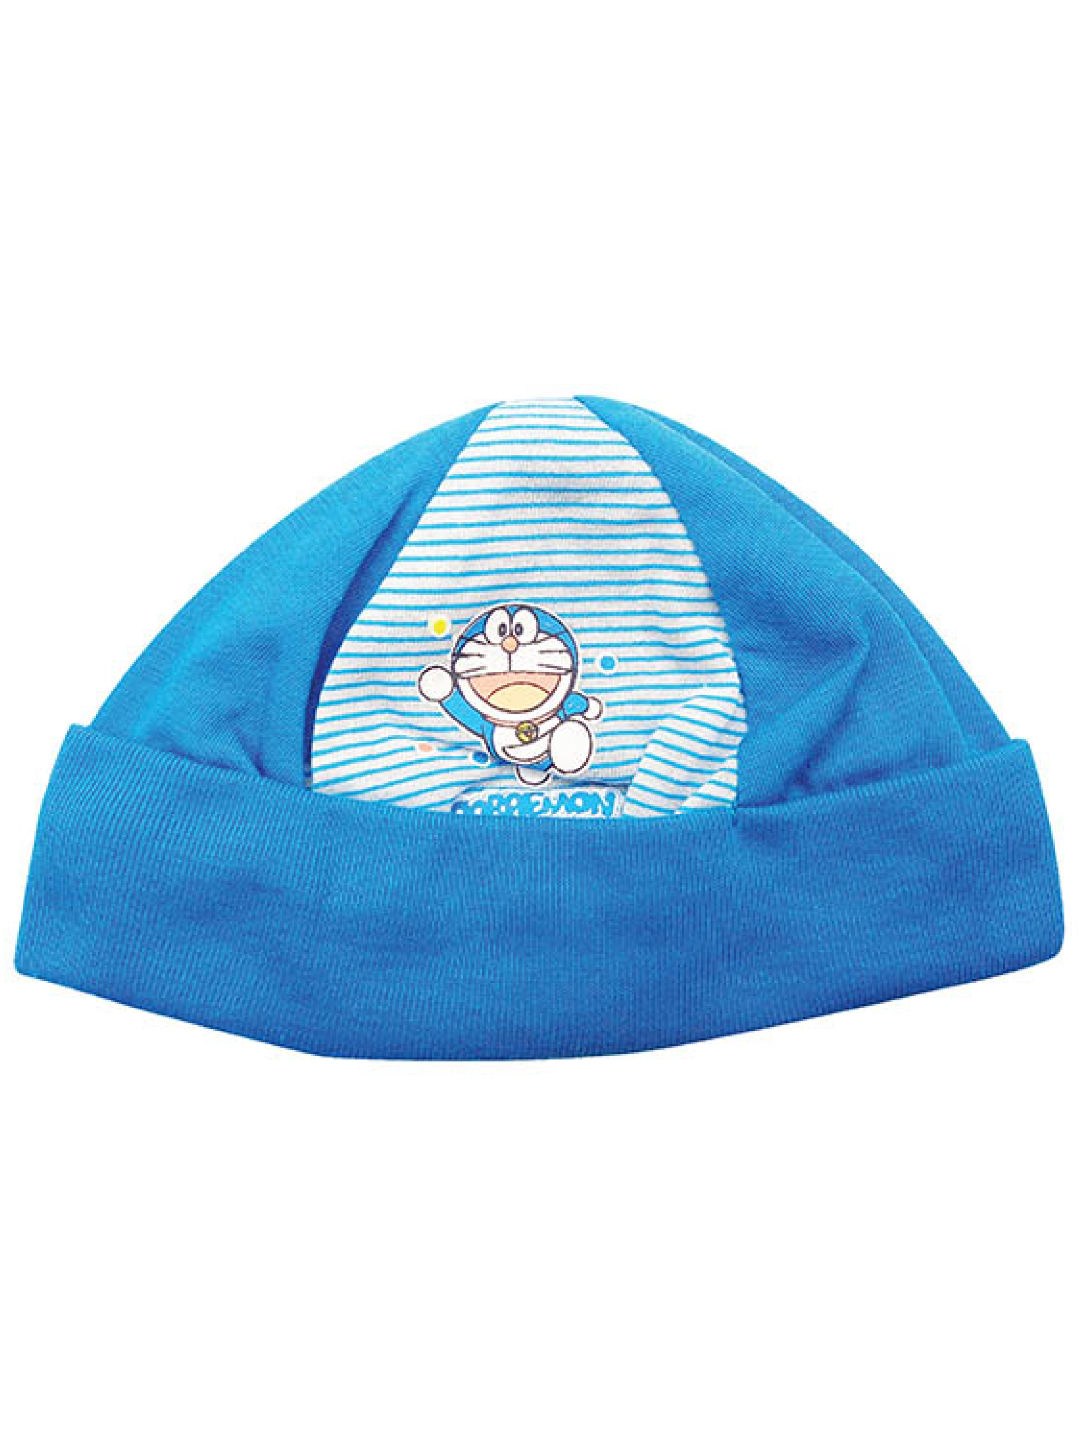 Doraemon Baby Glee Collection Bonnet (Boy)